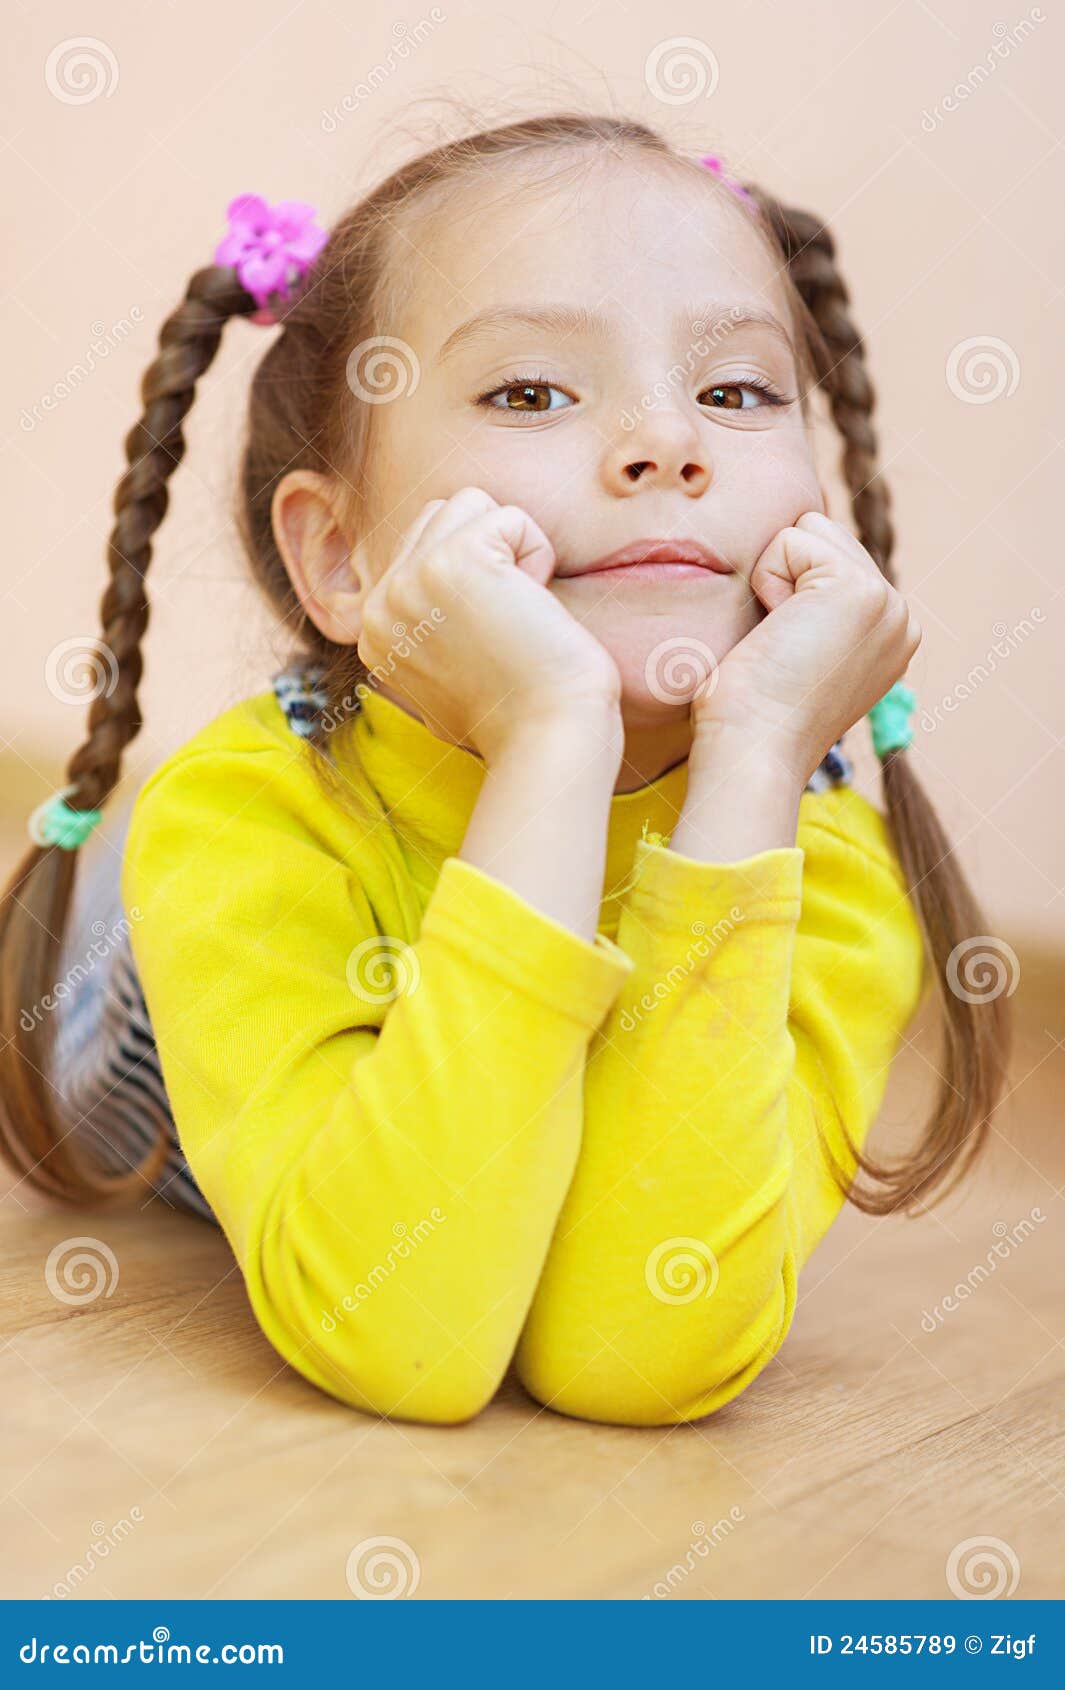 Little Girl in Yellow Dress Stock Image - Image of head, little: 24585789